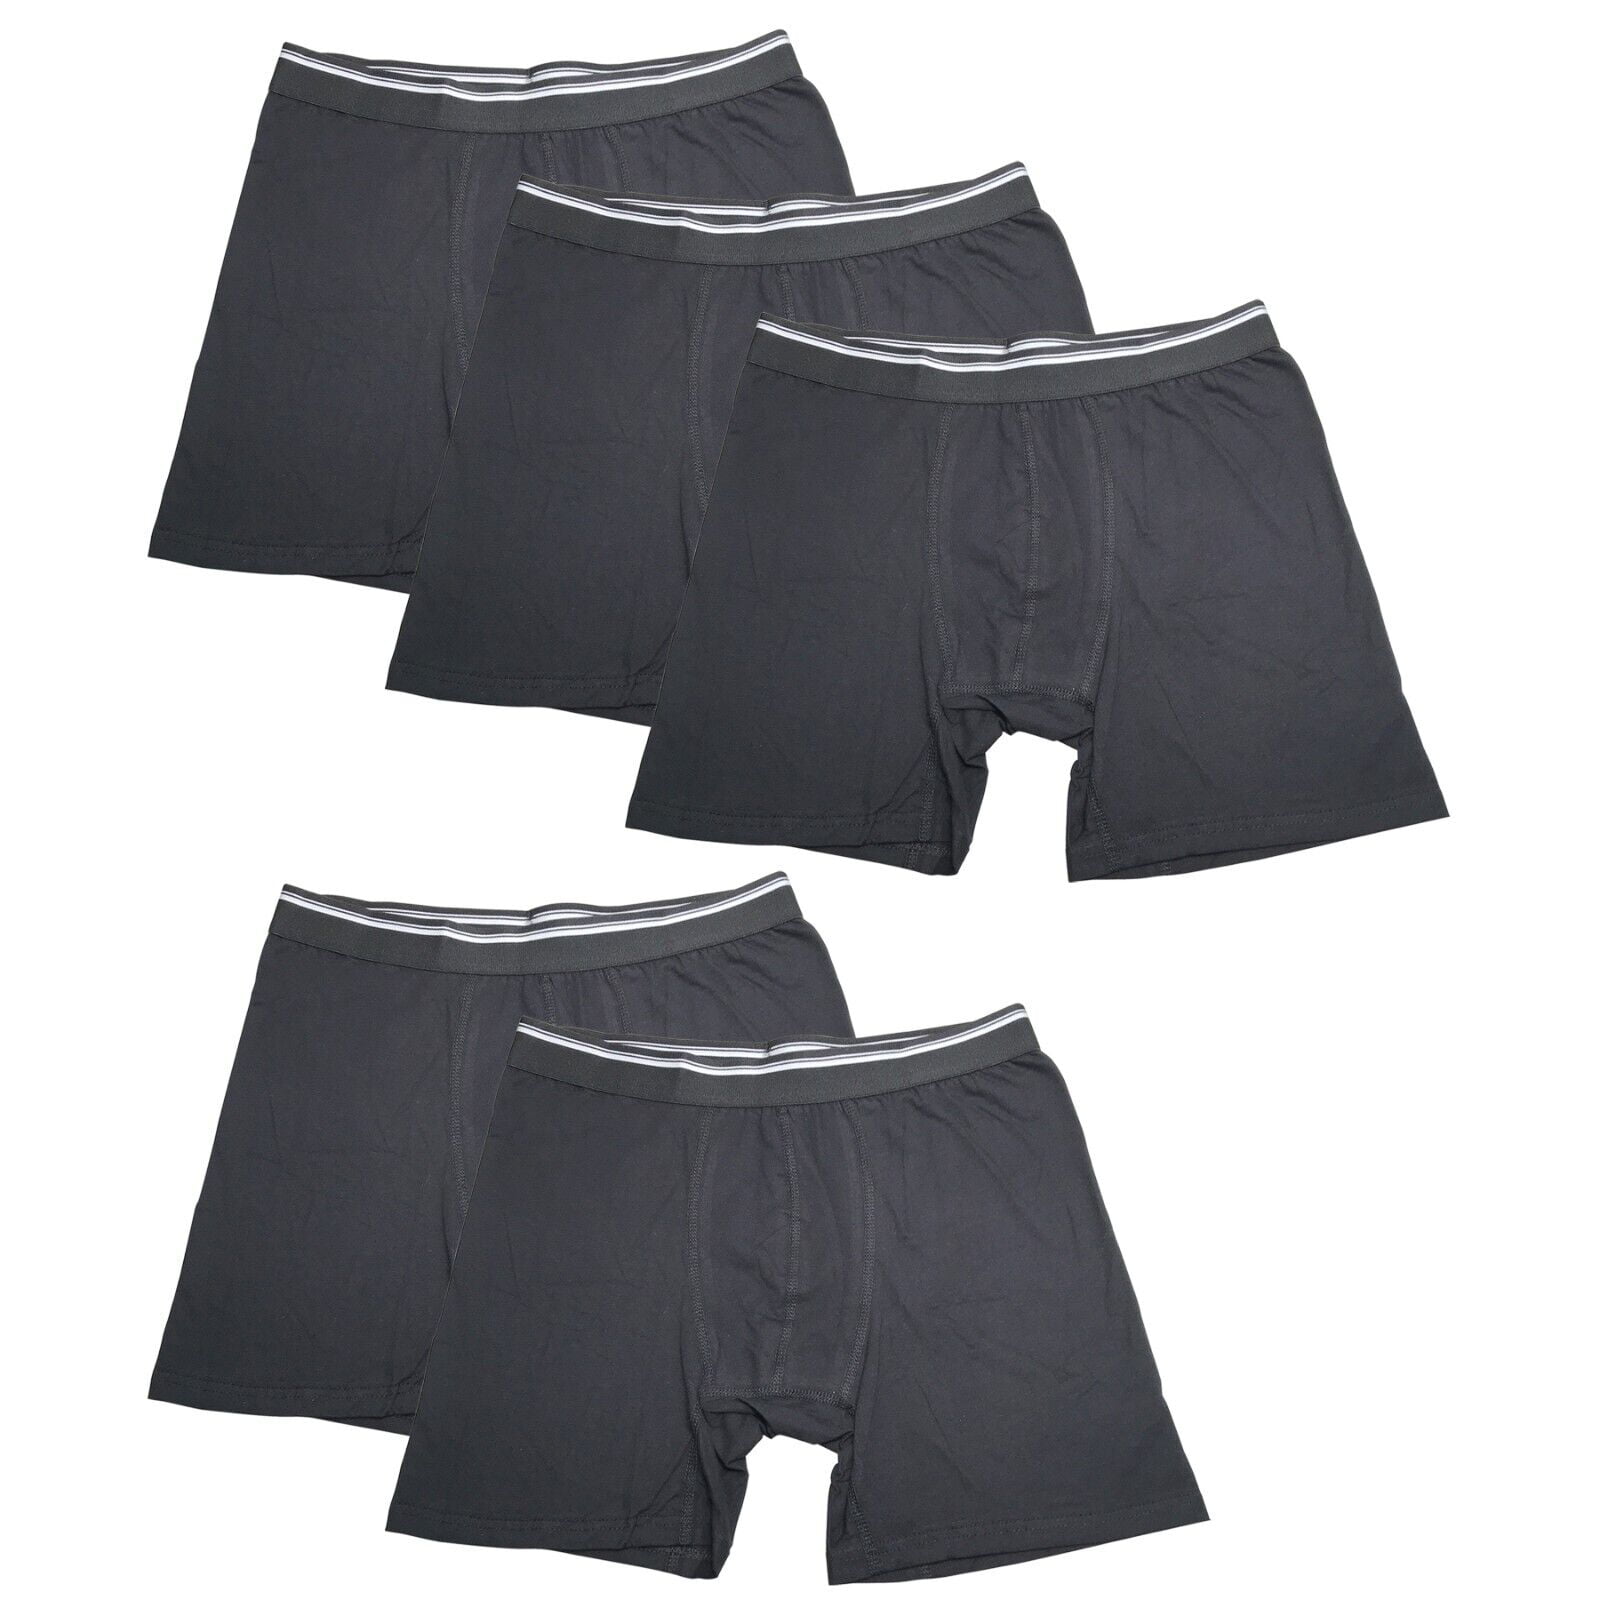 Men's Underwear Sexy Mesh Breathable Comfort Triangle Briefs 